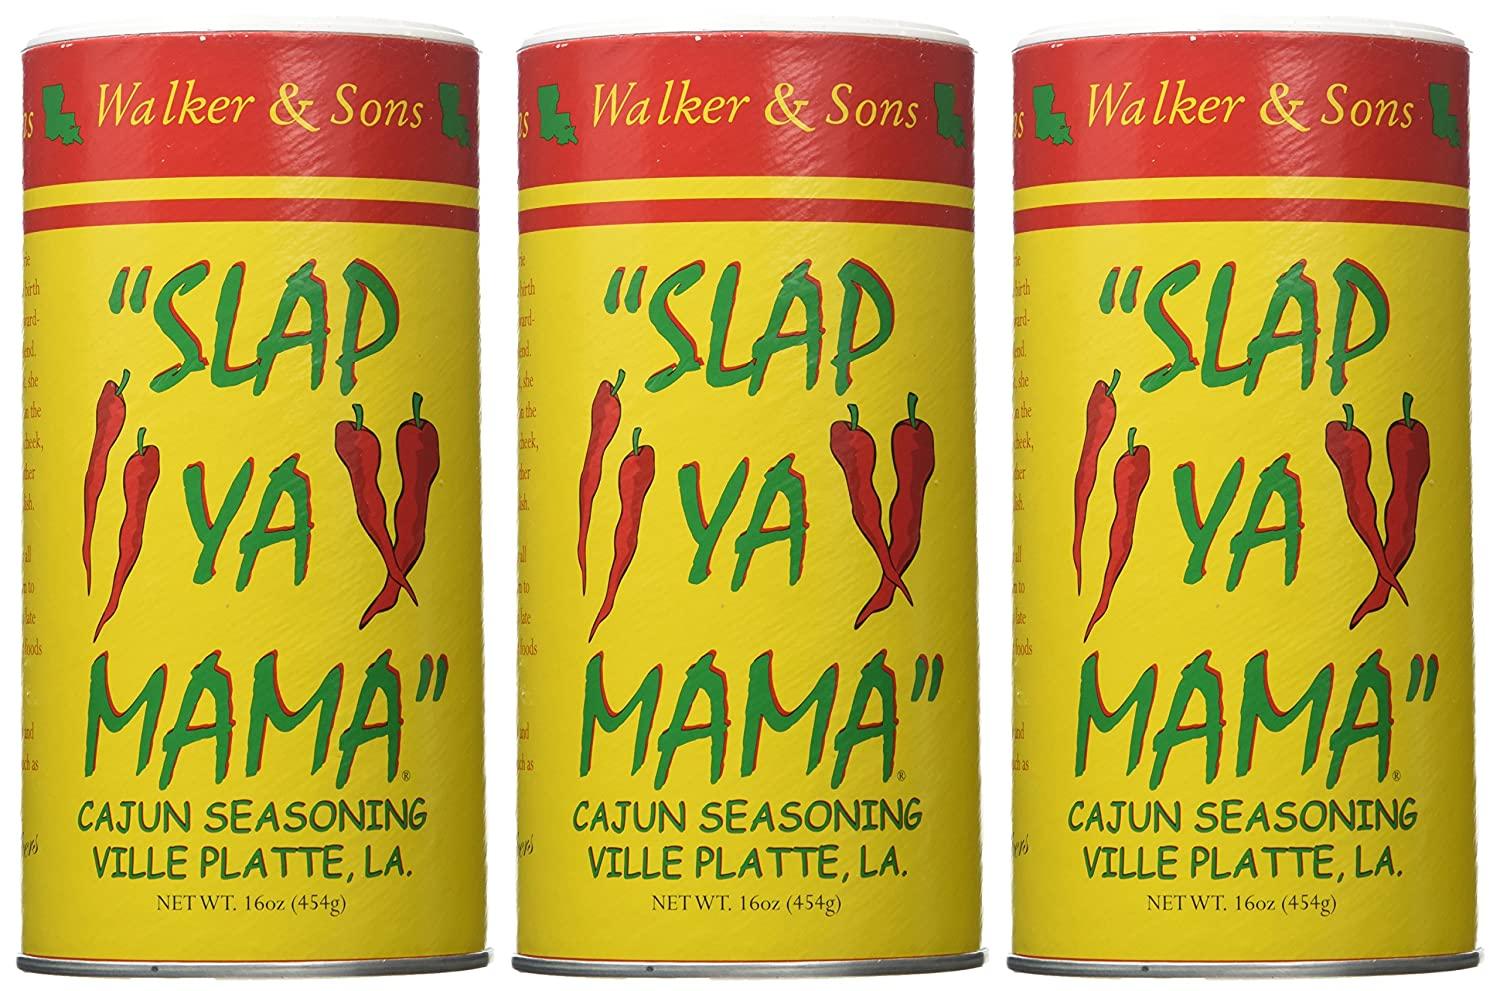 Slap Ya Mama Original Blend Cajun Seasoning